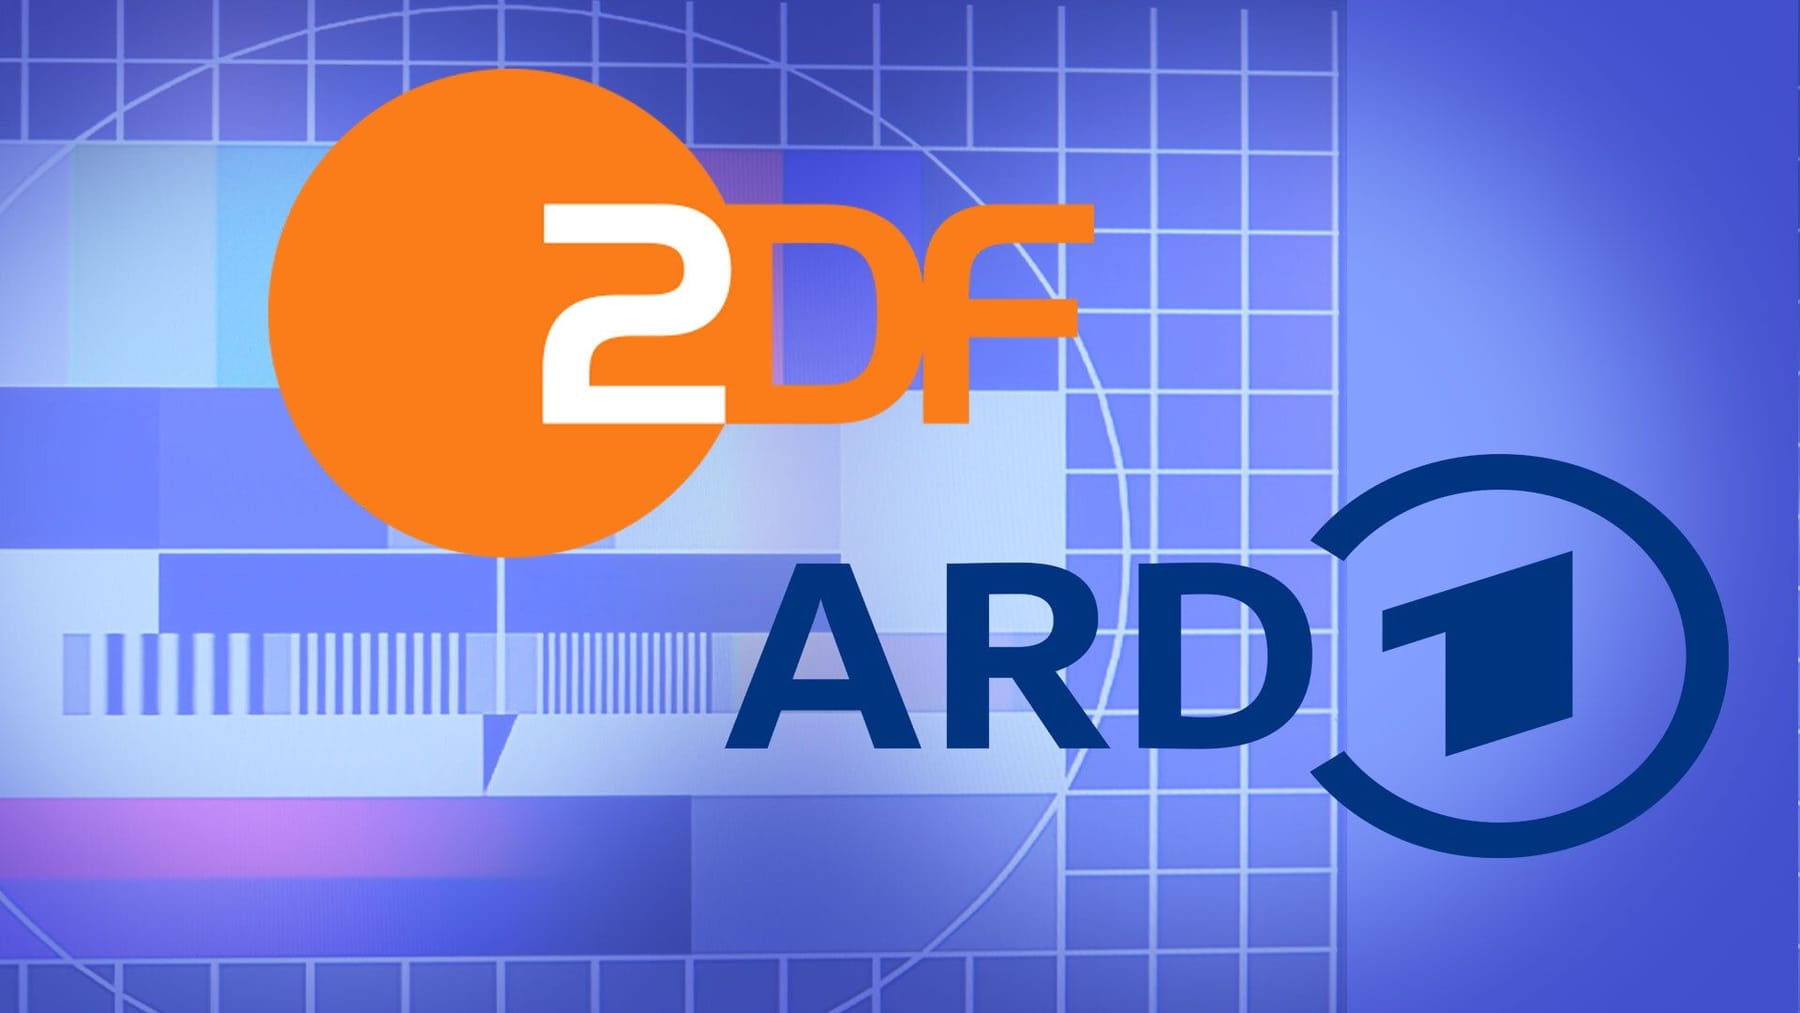 ARD should cancel popular formats